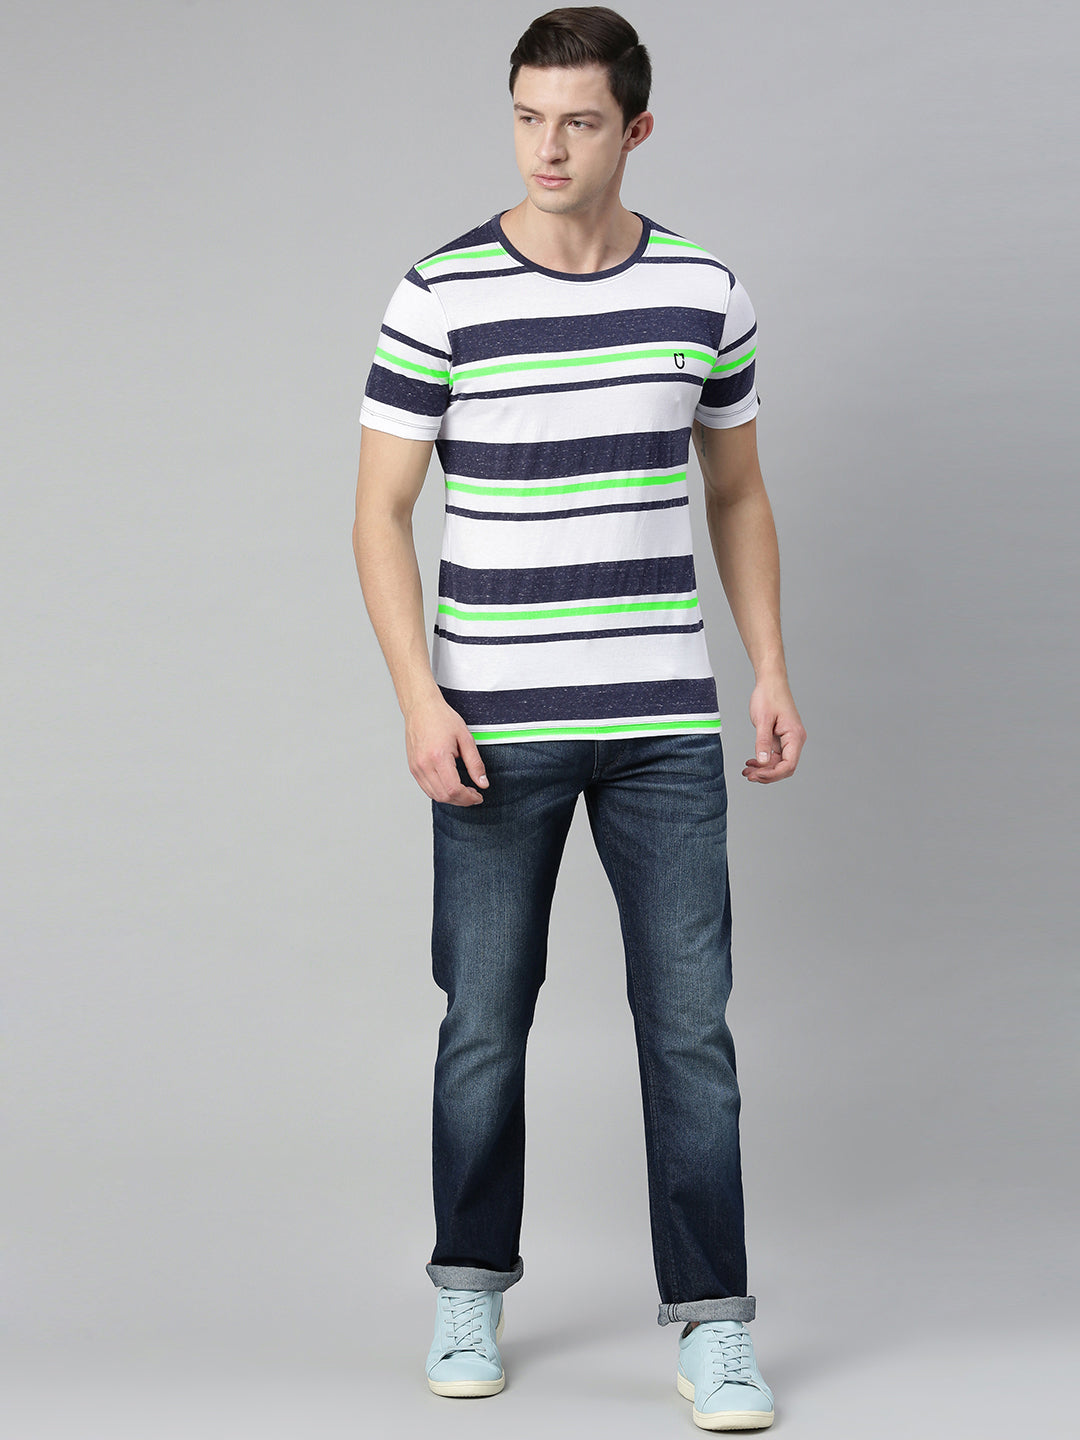 Urbano Fashion Men's White, Navy Blue, Green Striped Half Sleeve Slim Fit Cotton T-Shirt